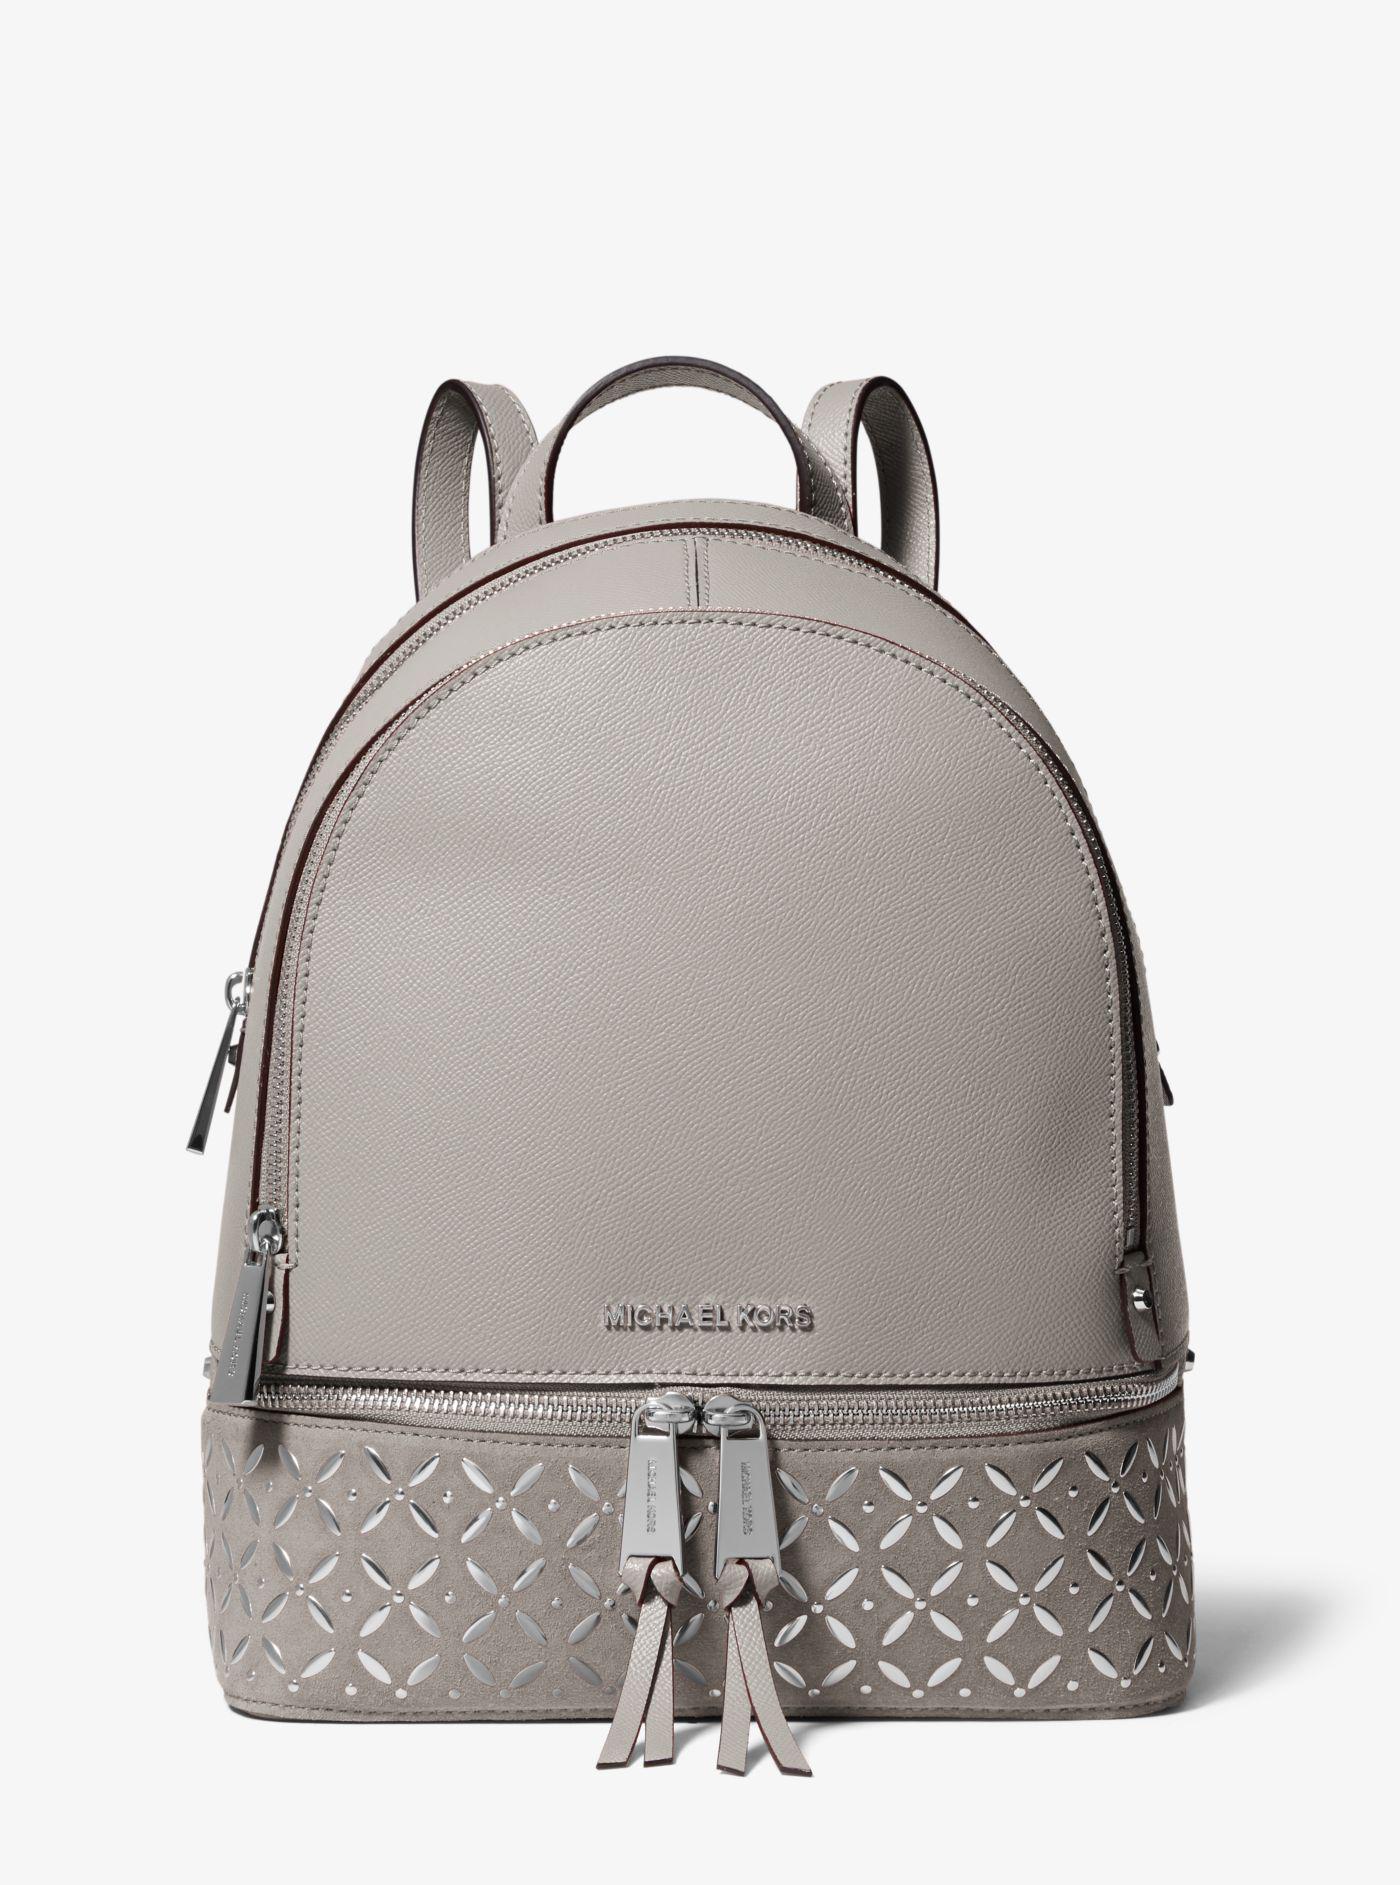 Michael Kors Rhea Medium Embellished Leather Backpack in Gray | Lyst